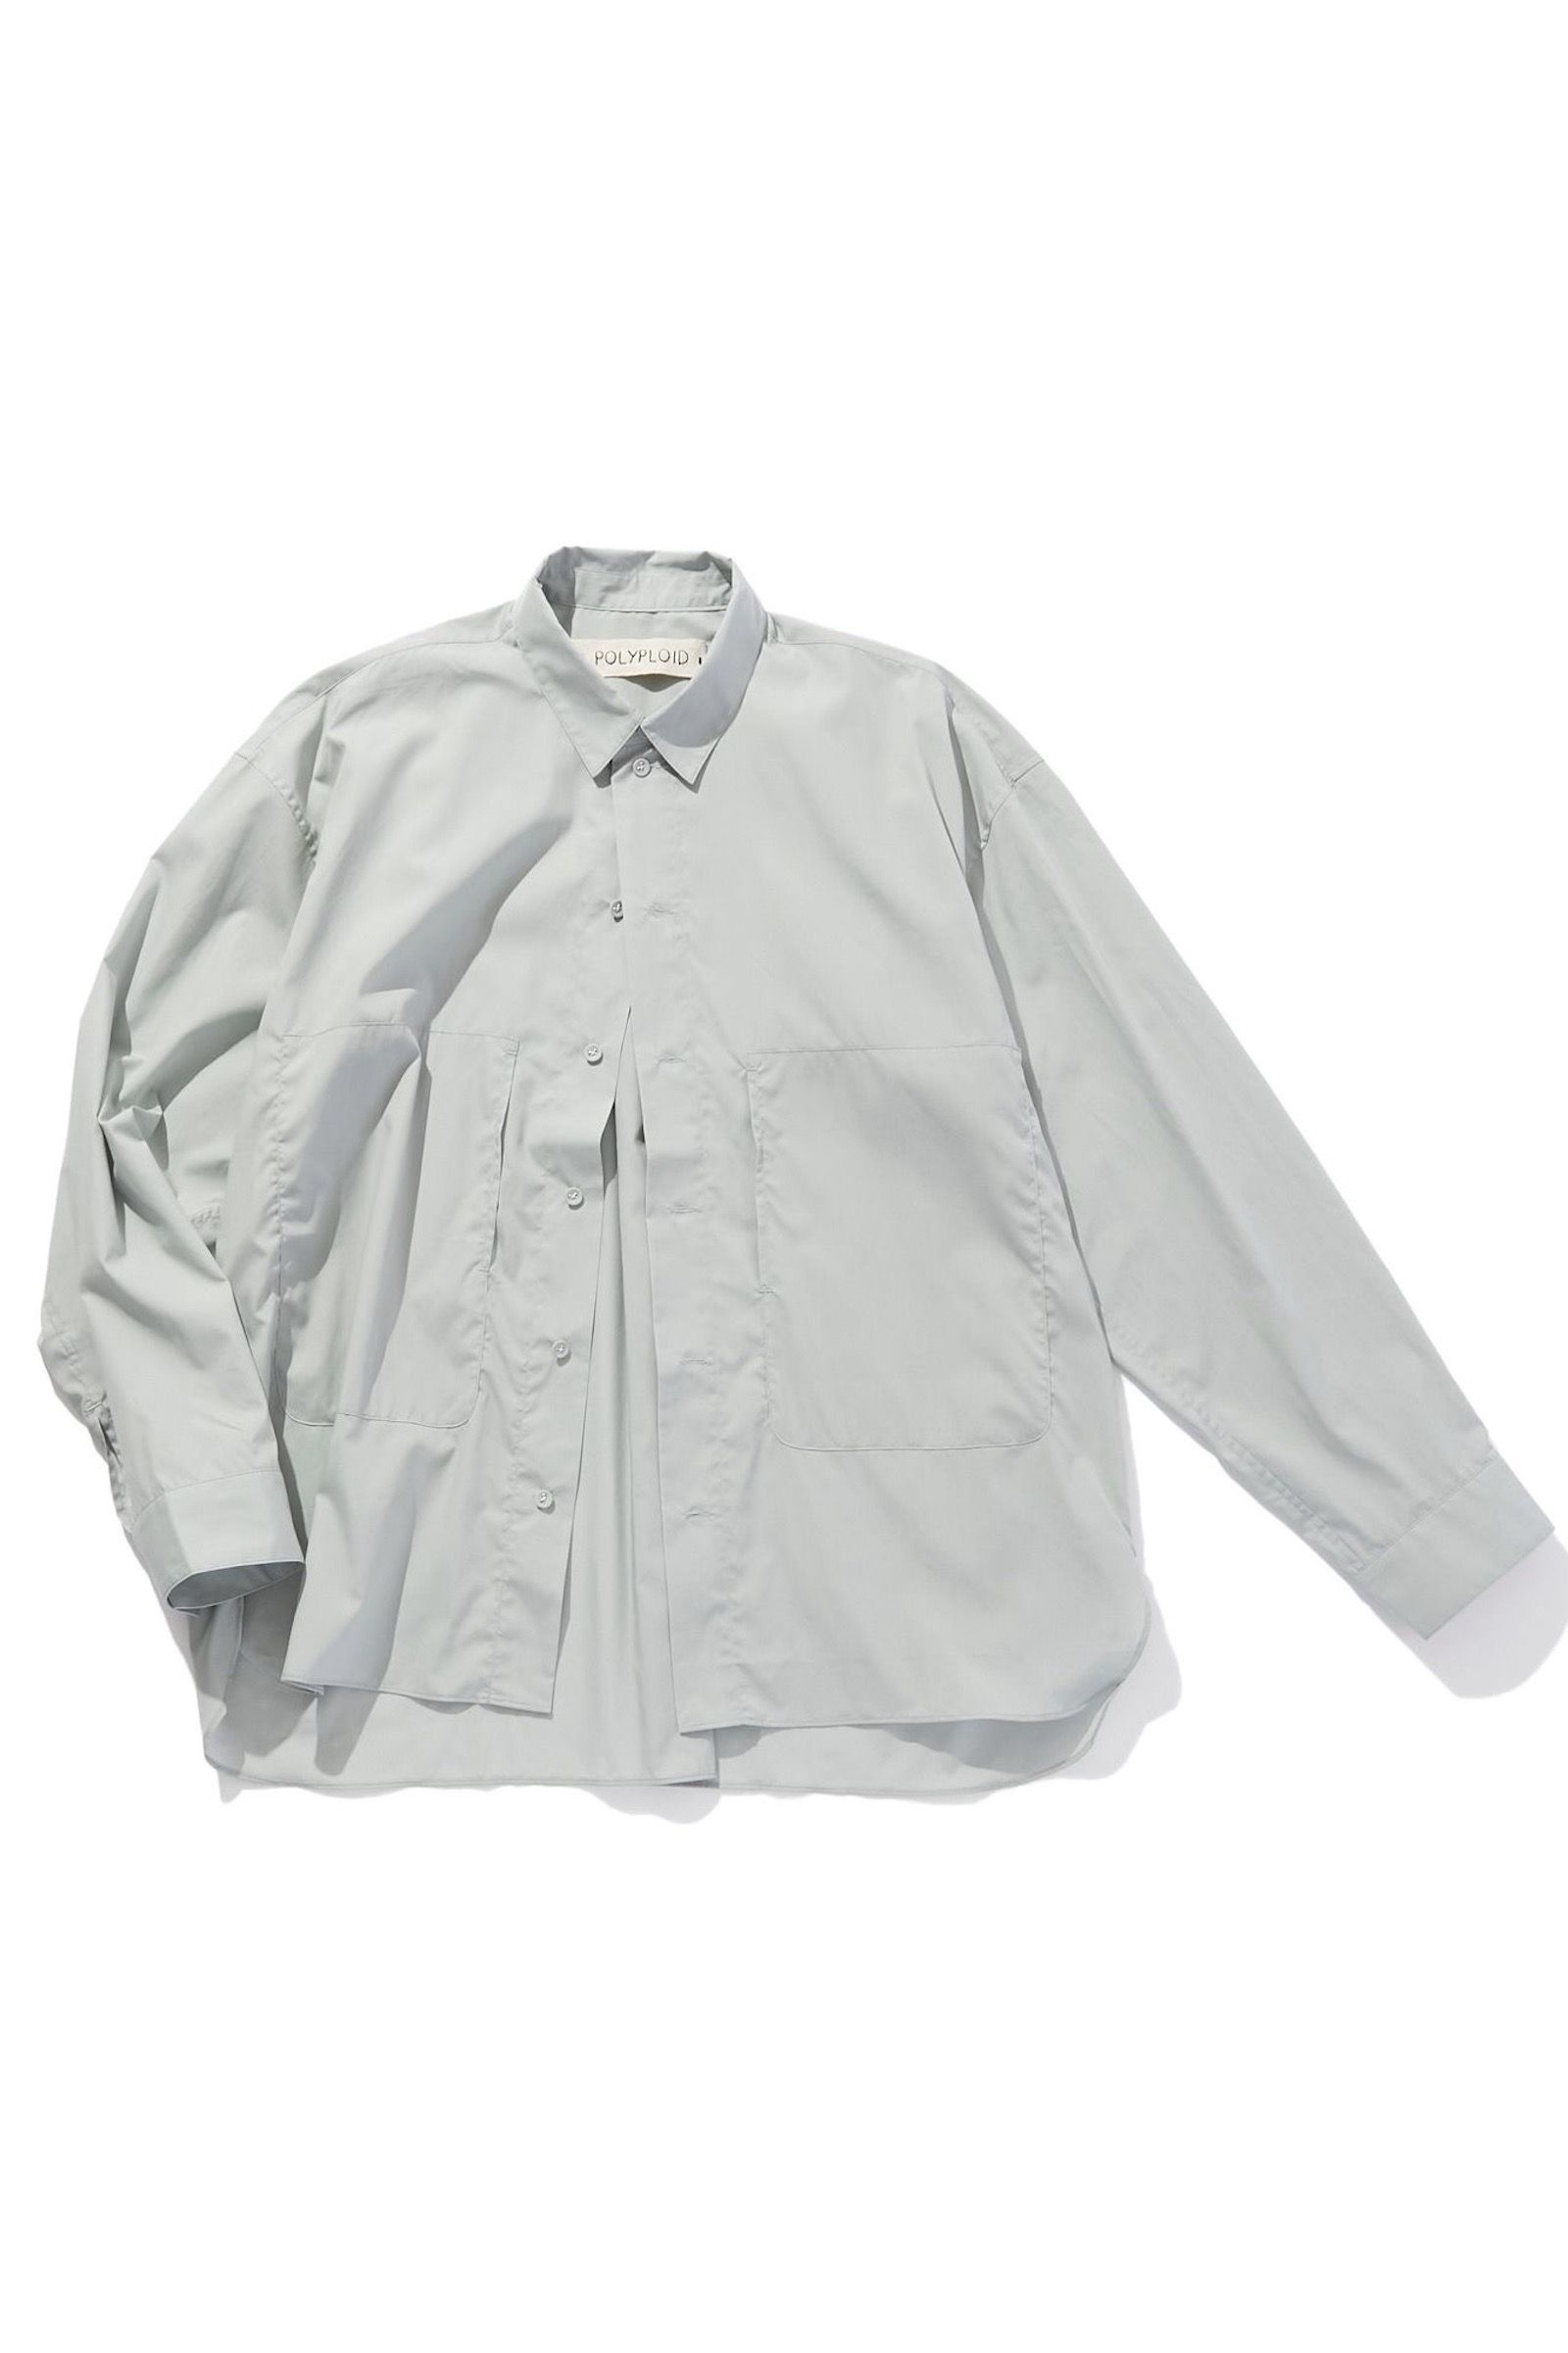 POLYPLOID - shirt jacket c -pale blue-22ss | asterisk